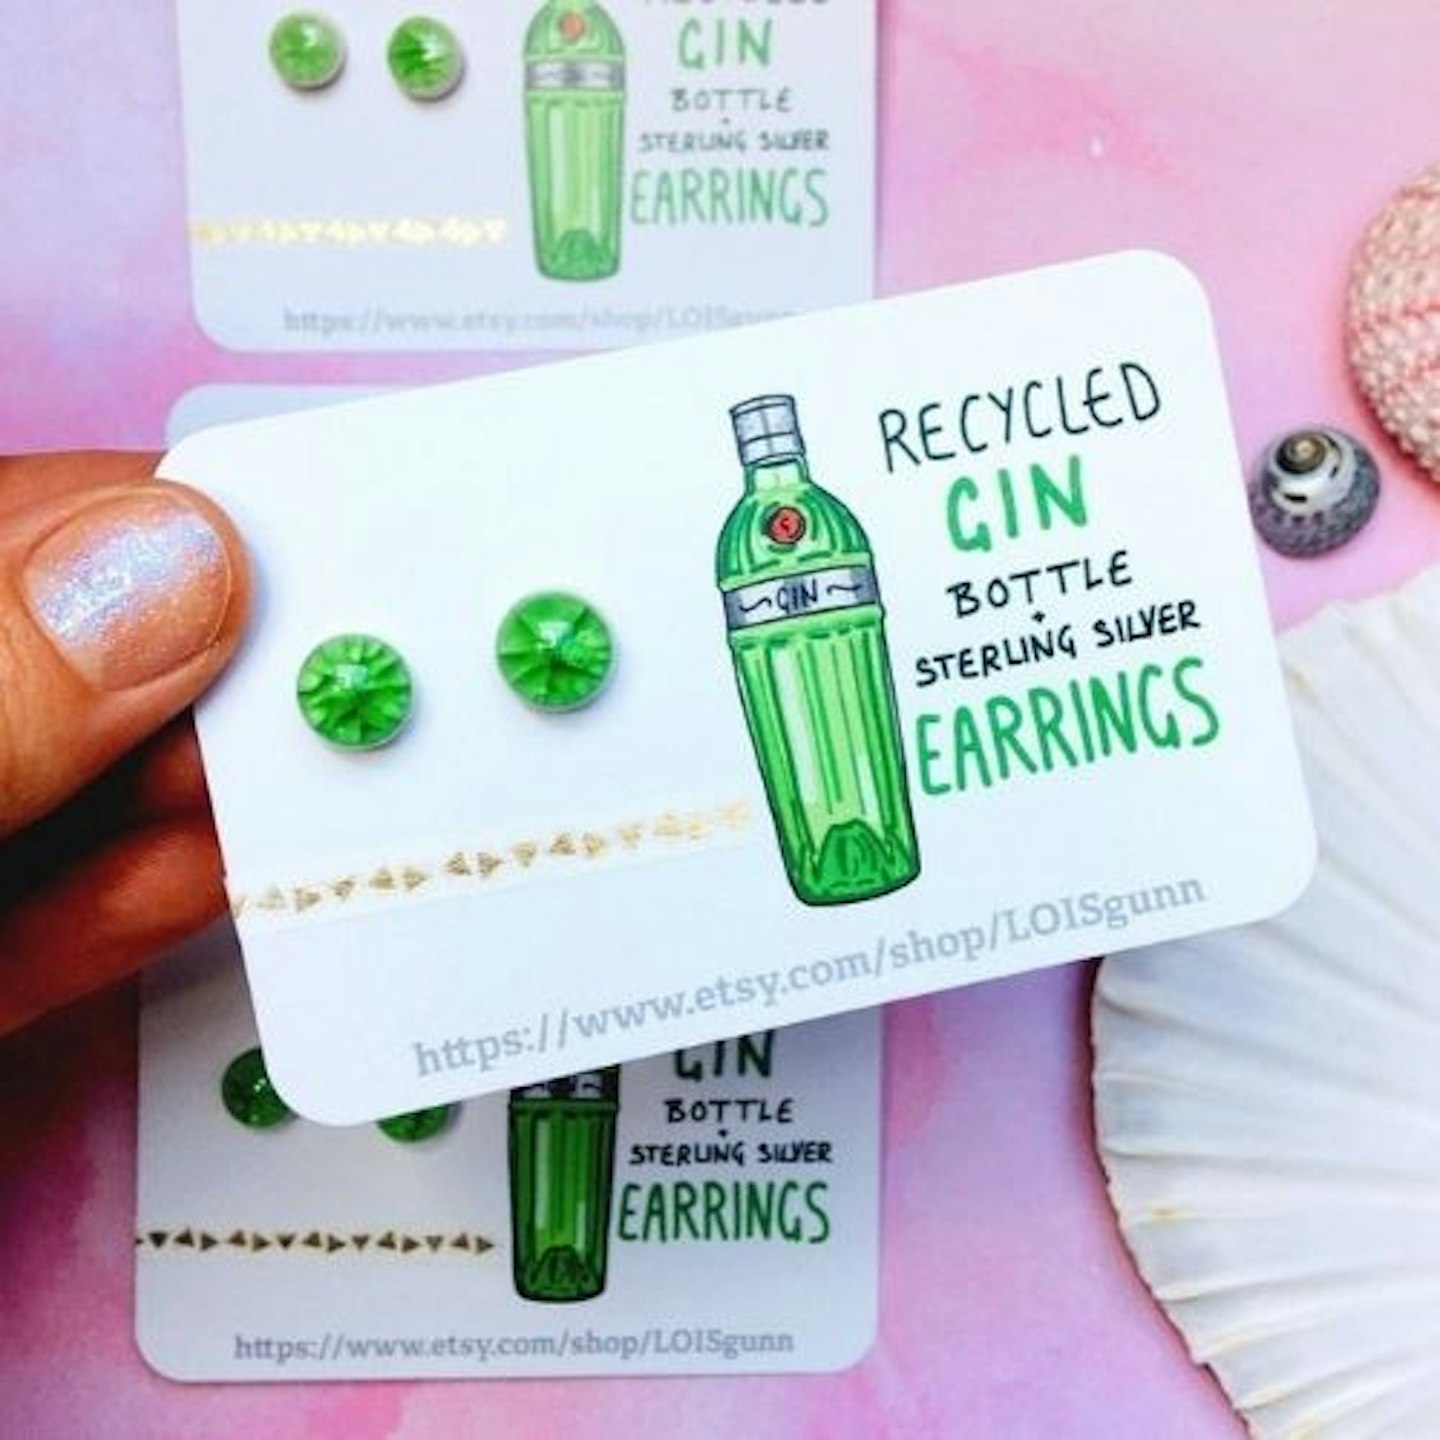 Recycled Gin Bottle Sterling Silver Earrings